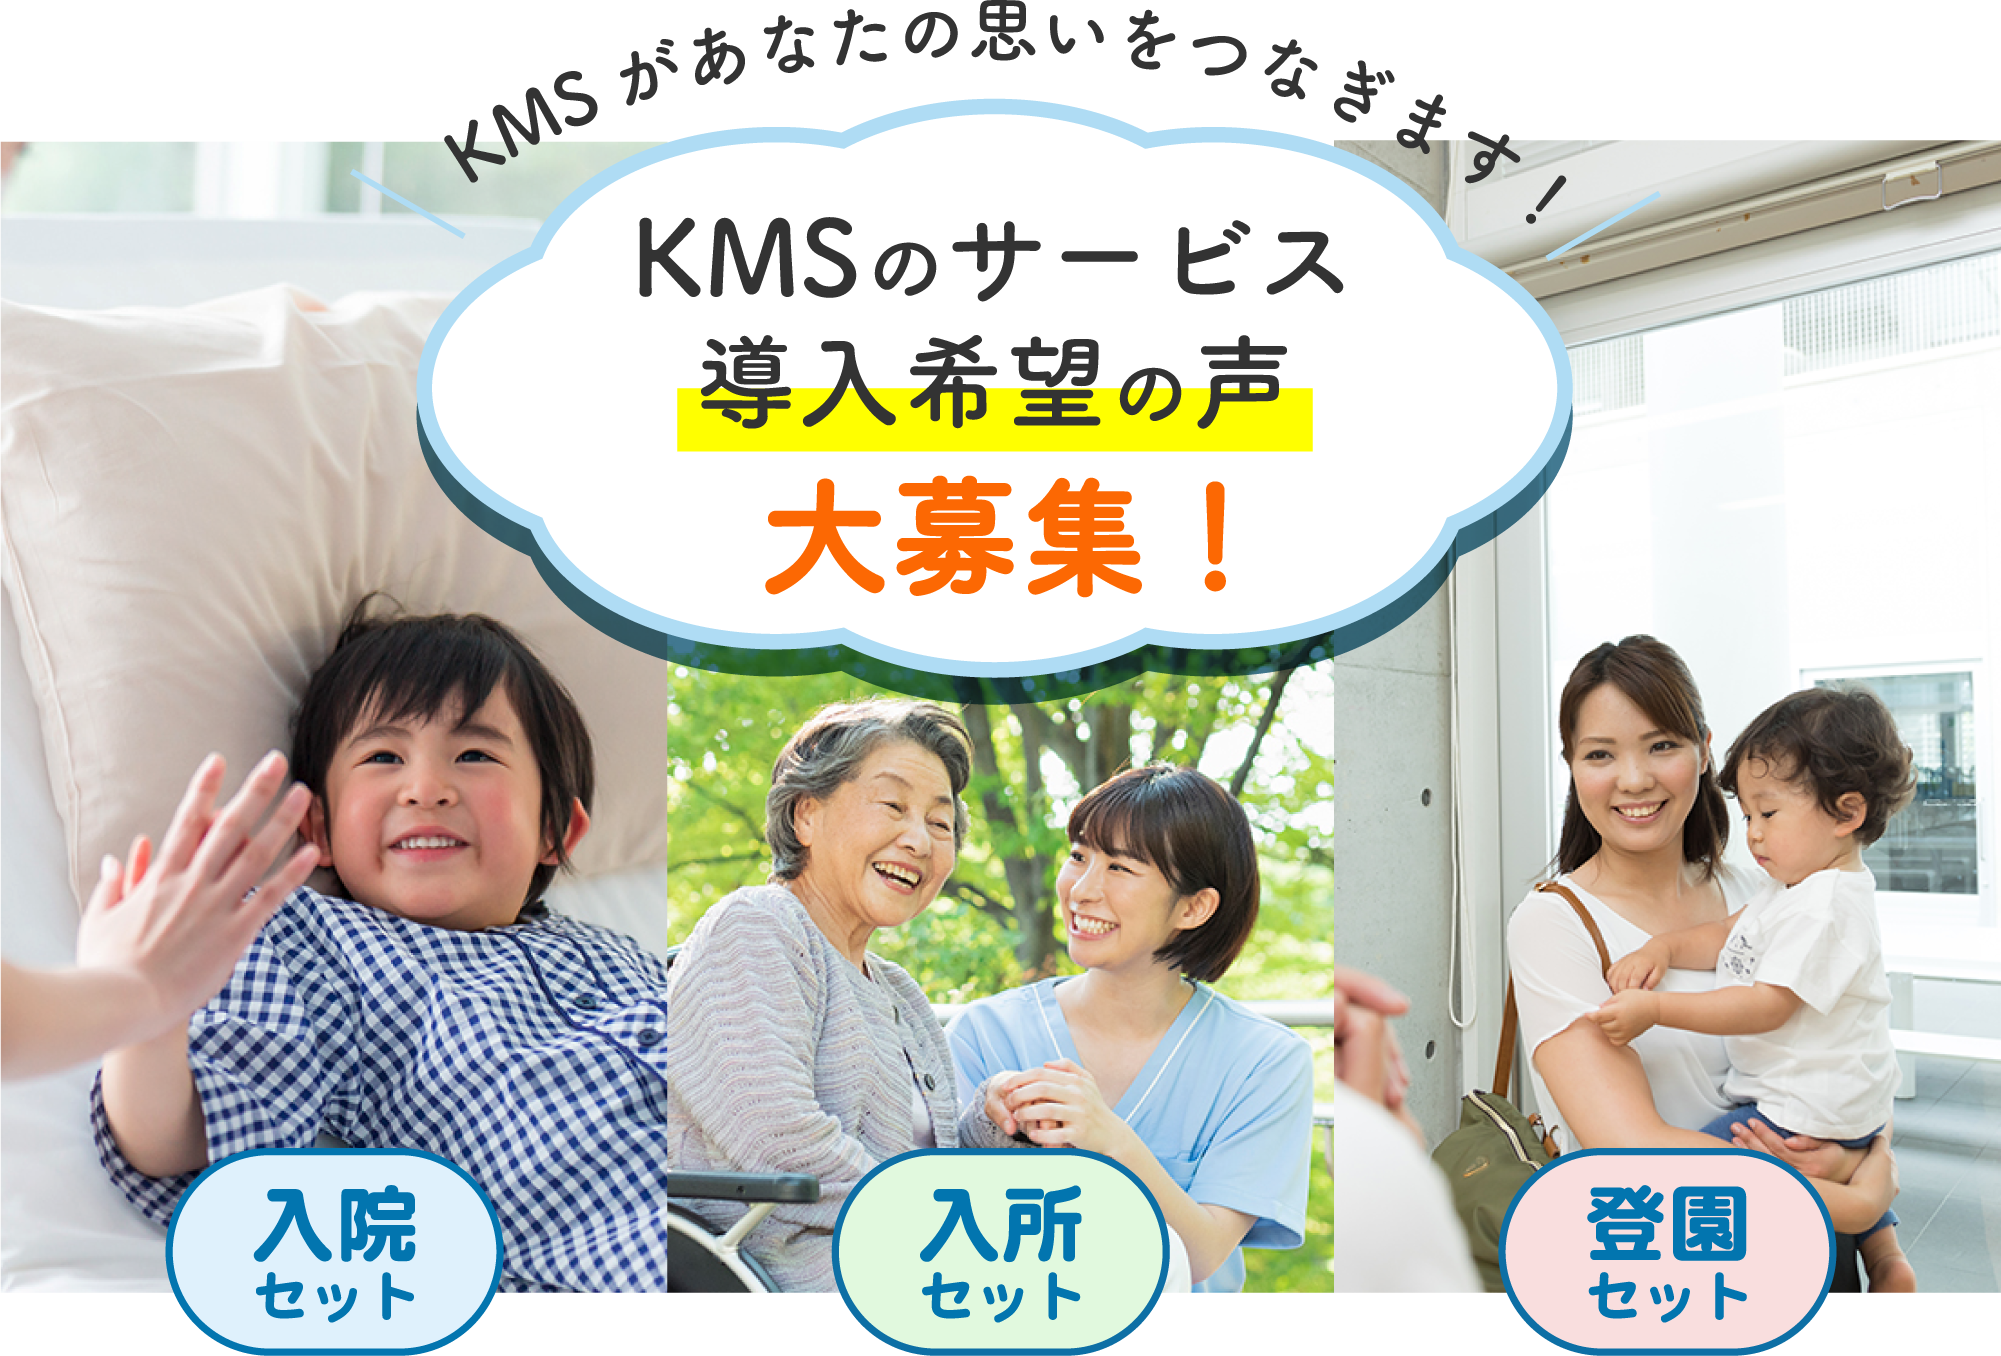 KMSがあなたの思いをつなぎます！KMSのサービス導入希望の声大募集！